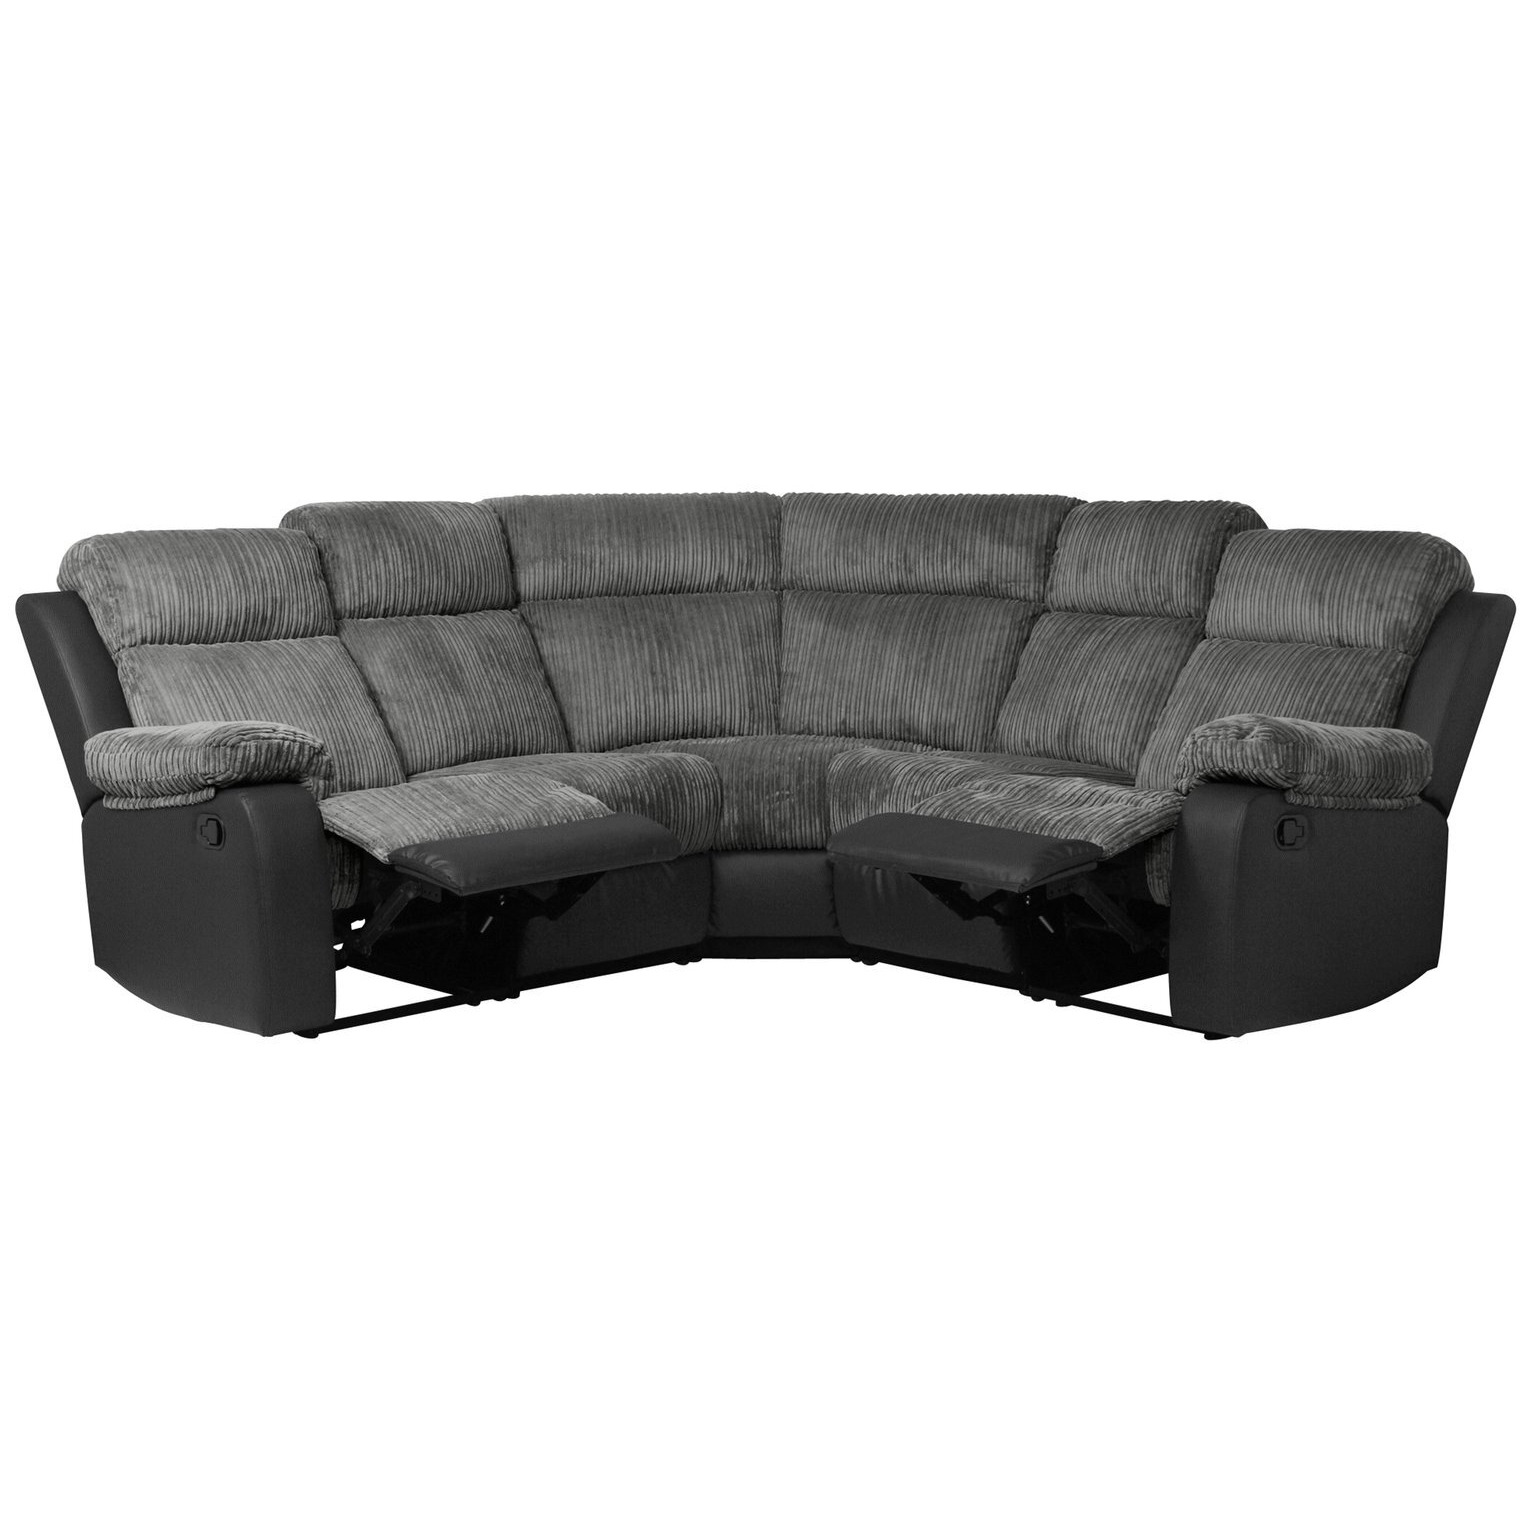 Argos Home Bradley Fabric Recliner Corner Sofa - Charcoal - image 1